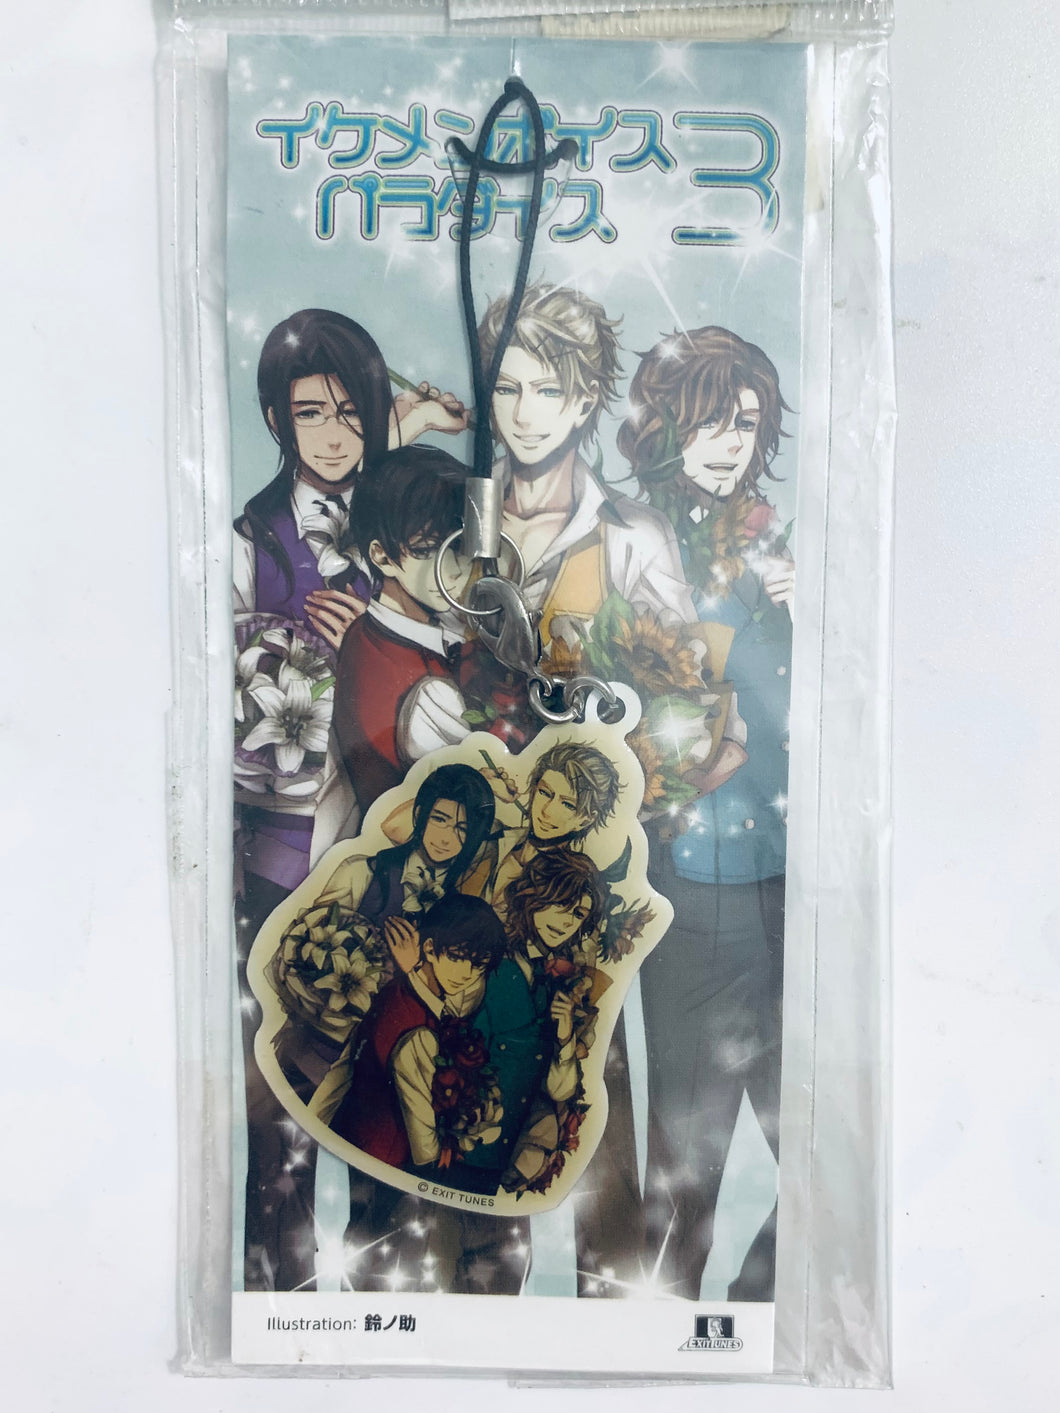 EXIT TUNES PRESENTS Ikemen Voice Paradise 3 - Super Handsome - Original Mobile Phone Strap